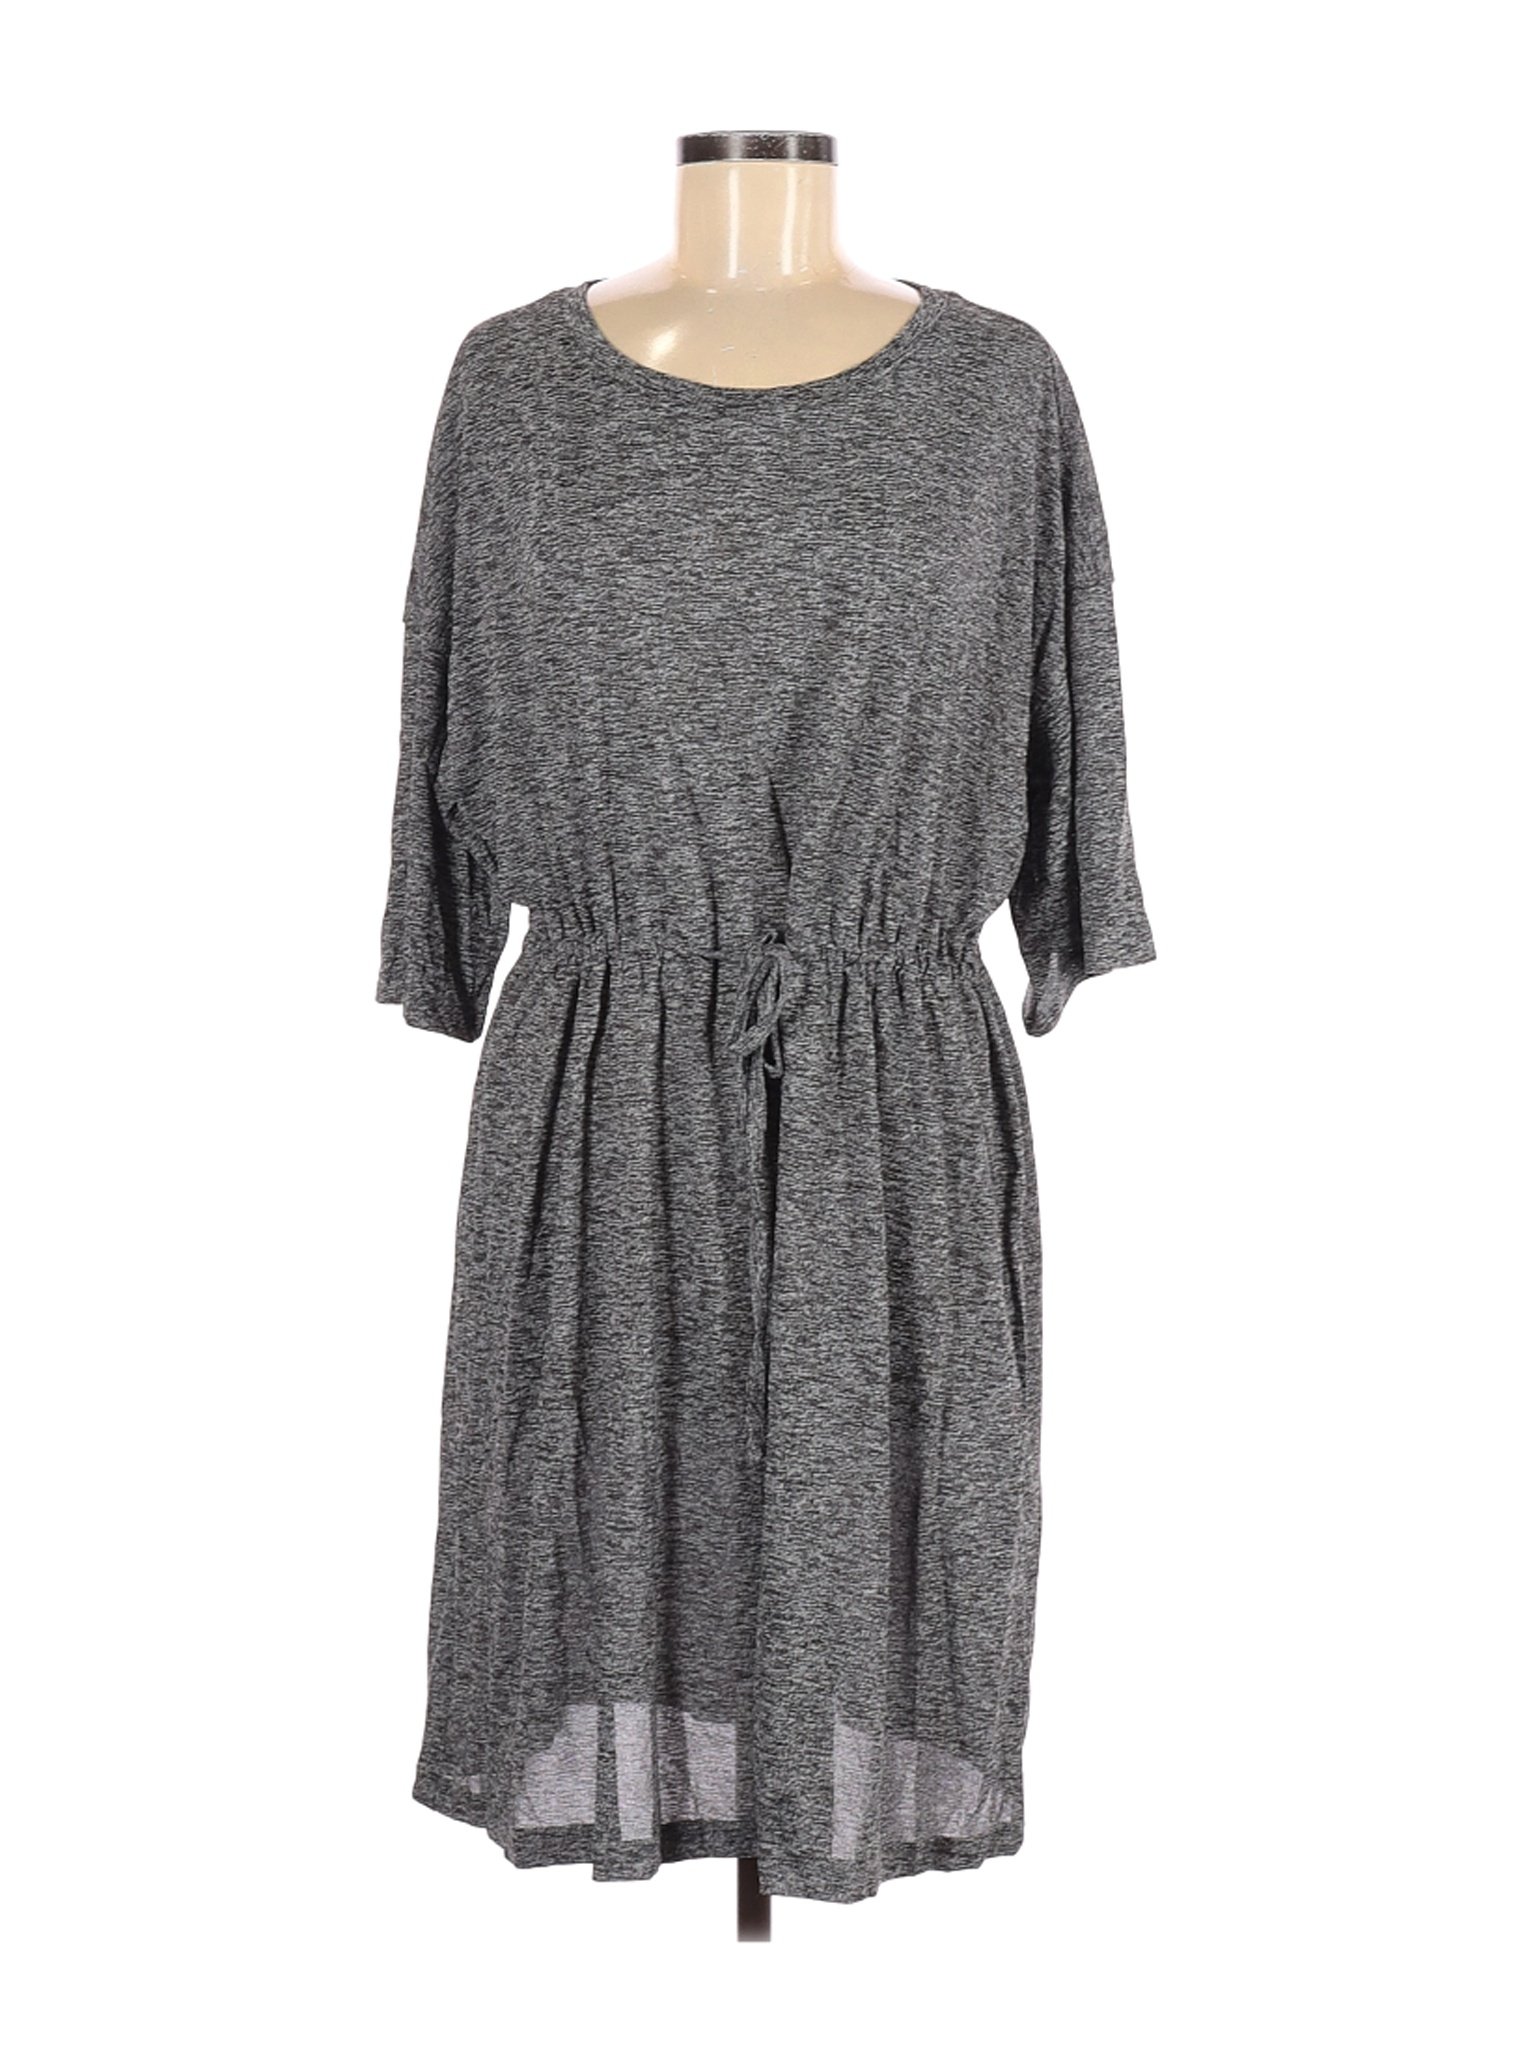 Unbranded Women Gray Casual Dress M | eBay